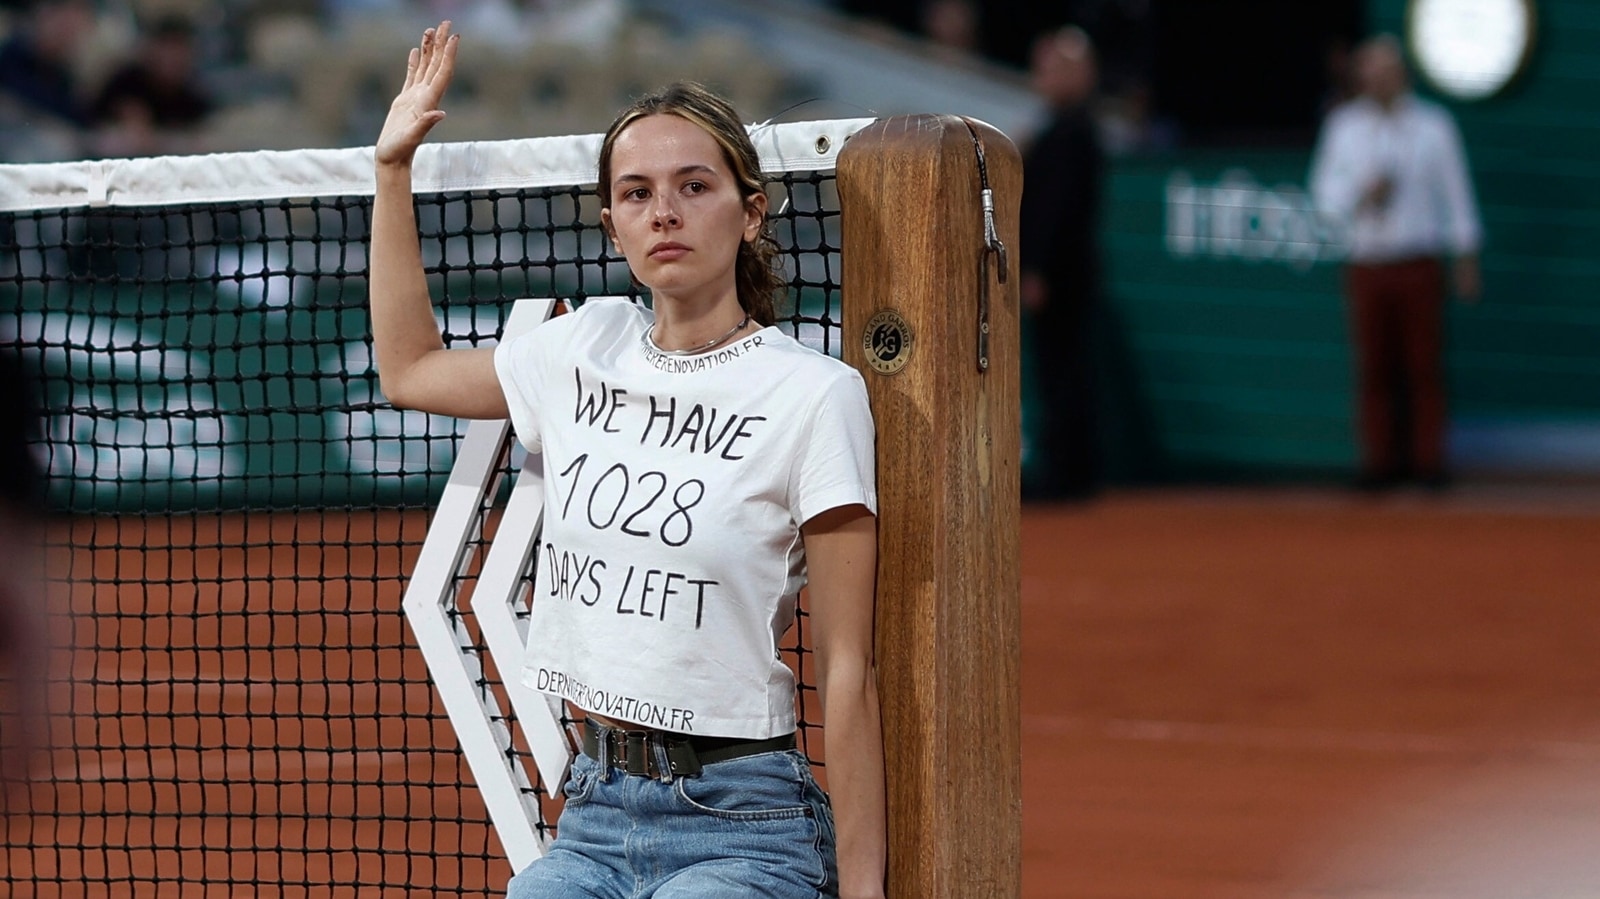 Environmental activist disrupts French Open semi-final